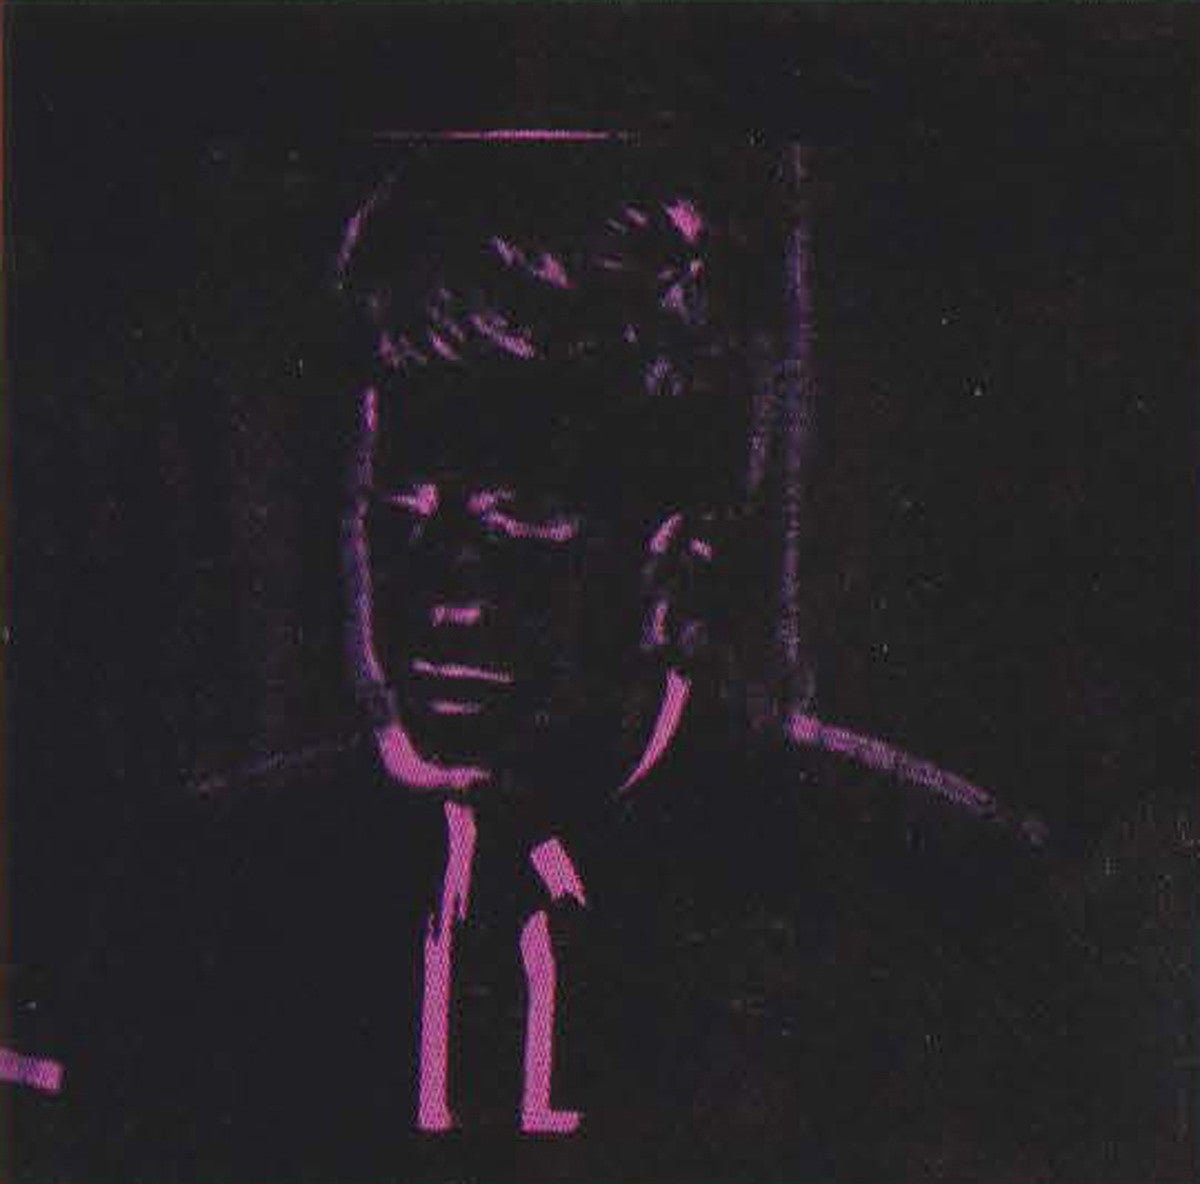 Flash (FS II.41) (November 22, 1963 Portfolio) - Print by Andy Warhol